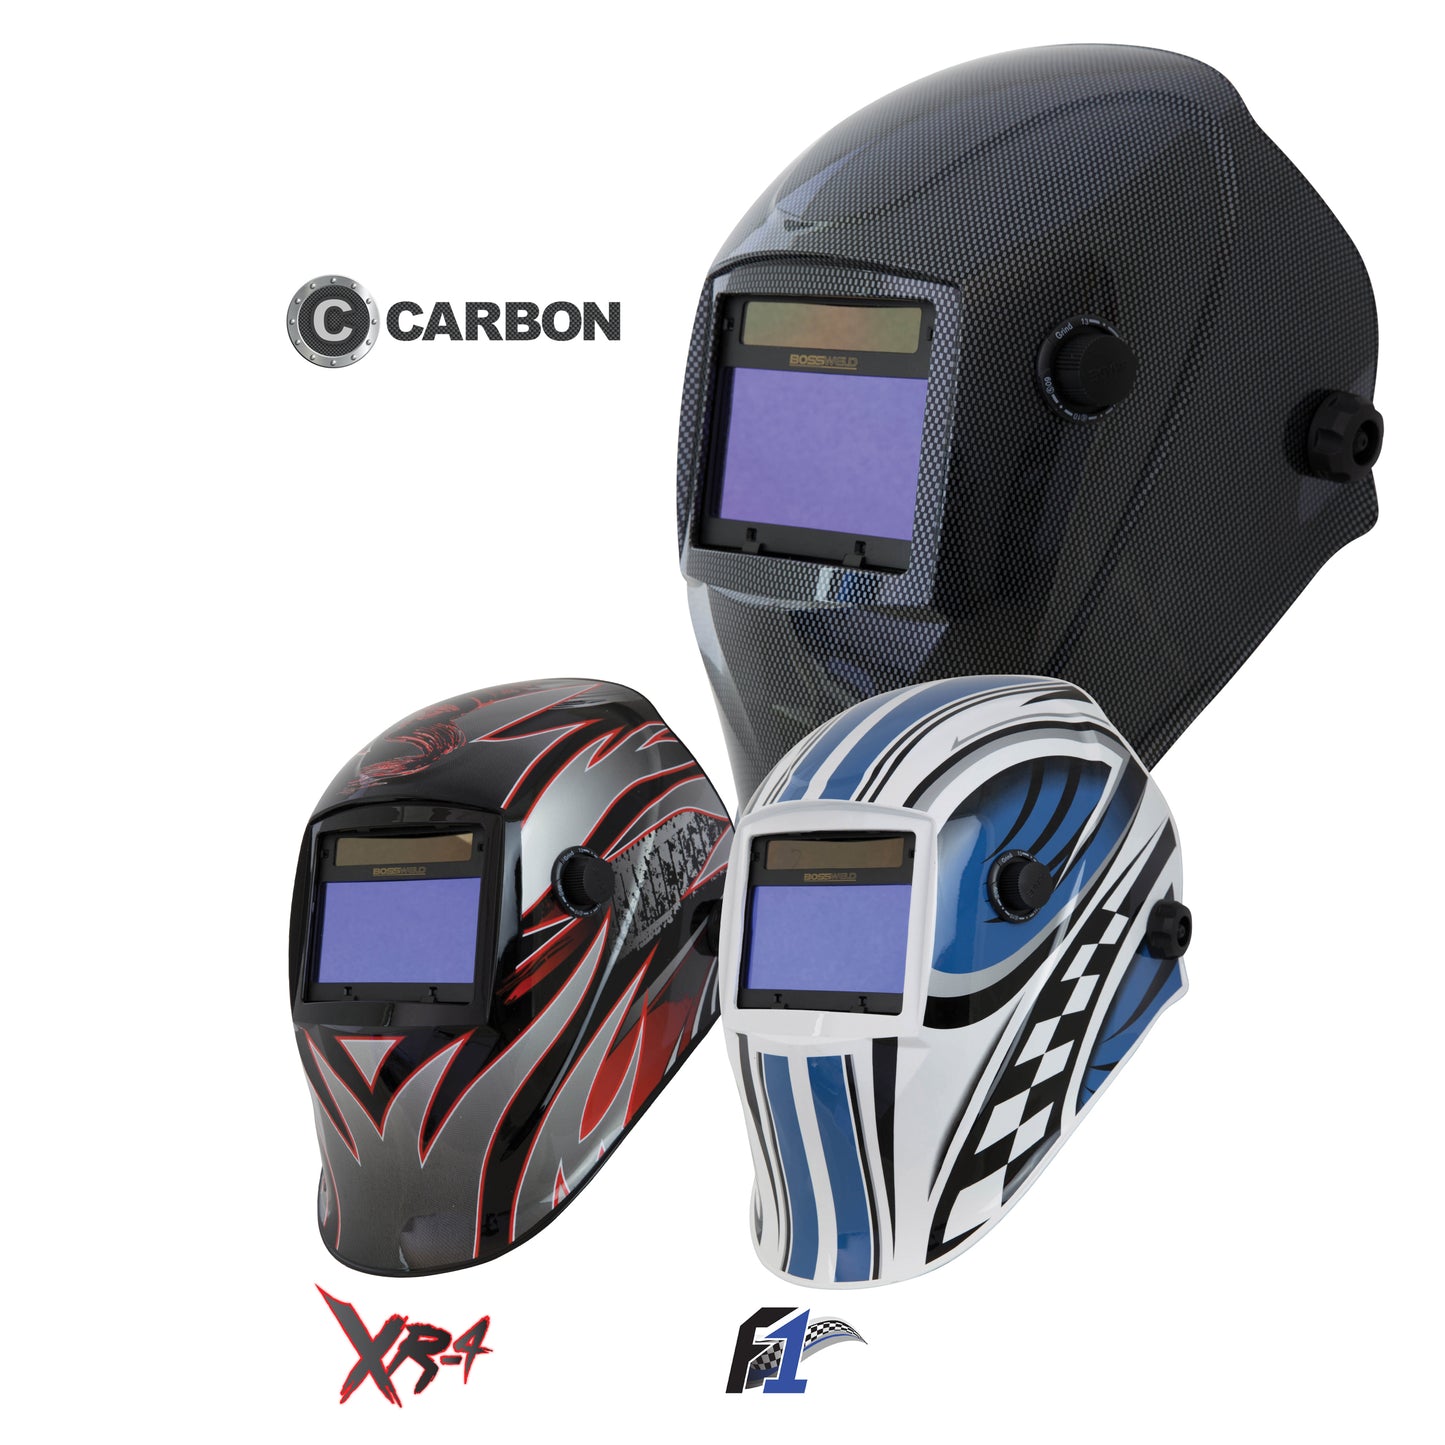 BOSSWELD X-Sight Series Electronic Welding Helmet